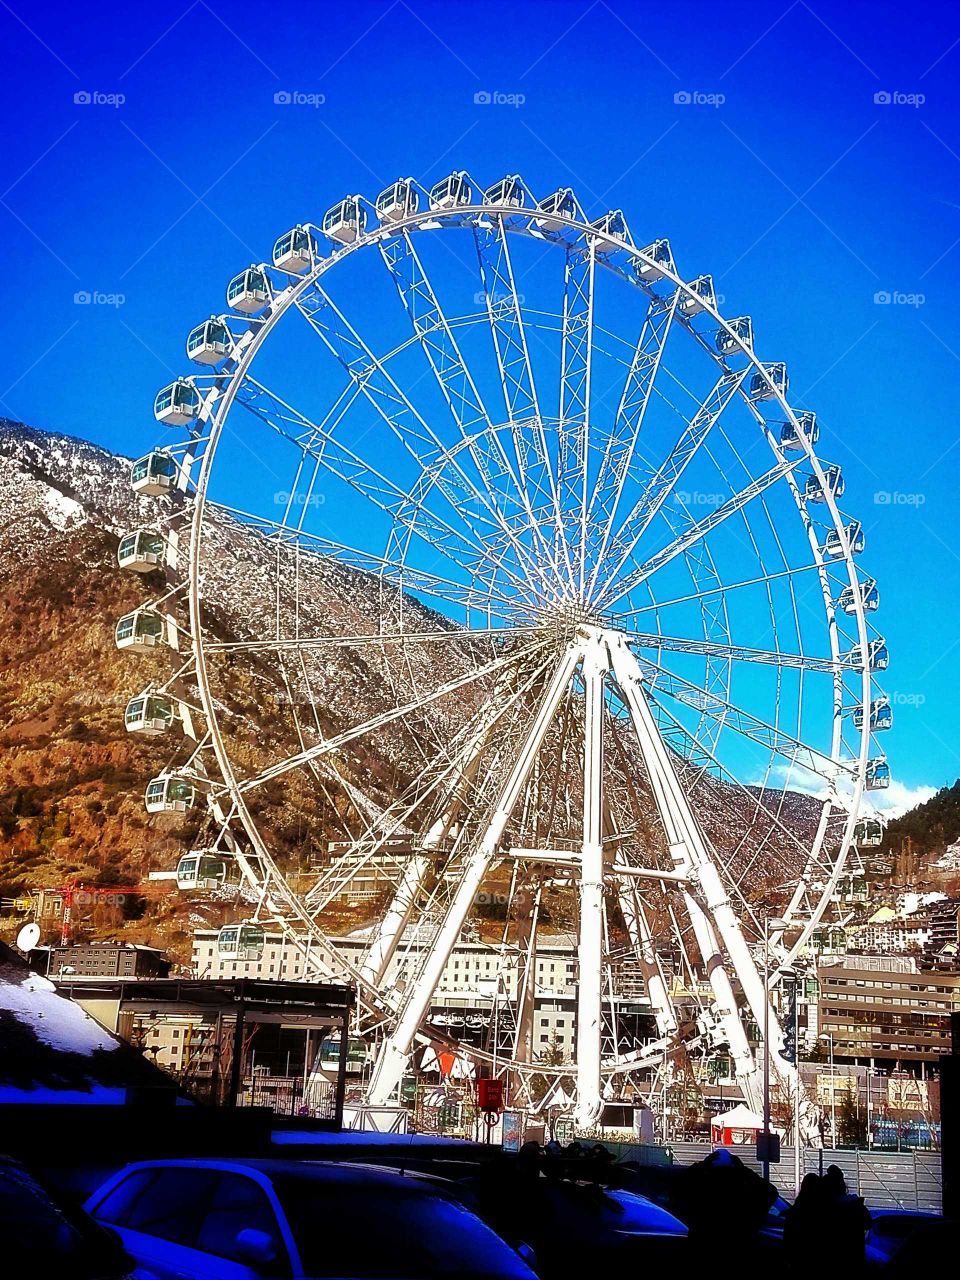 The big white wheel